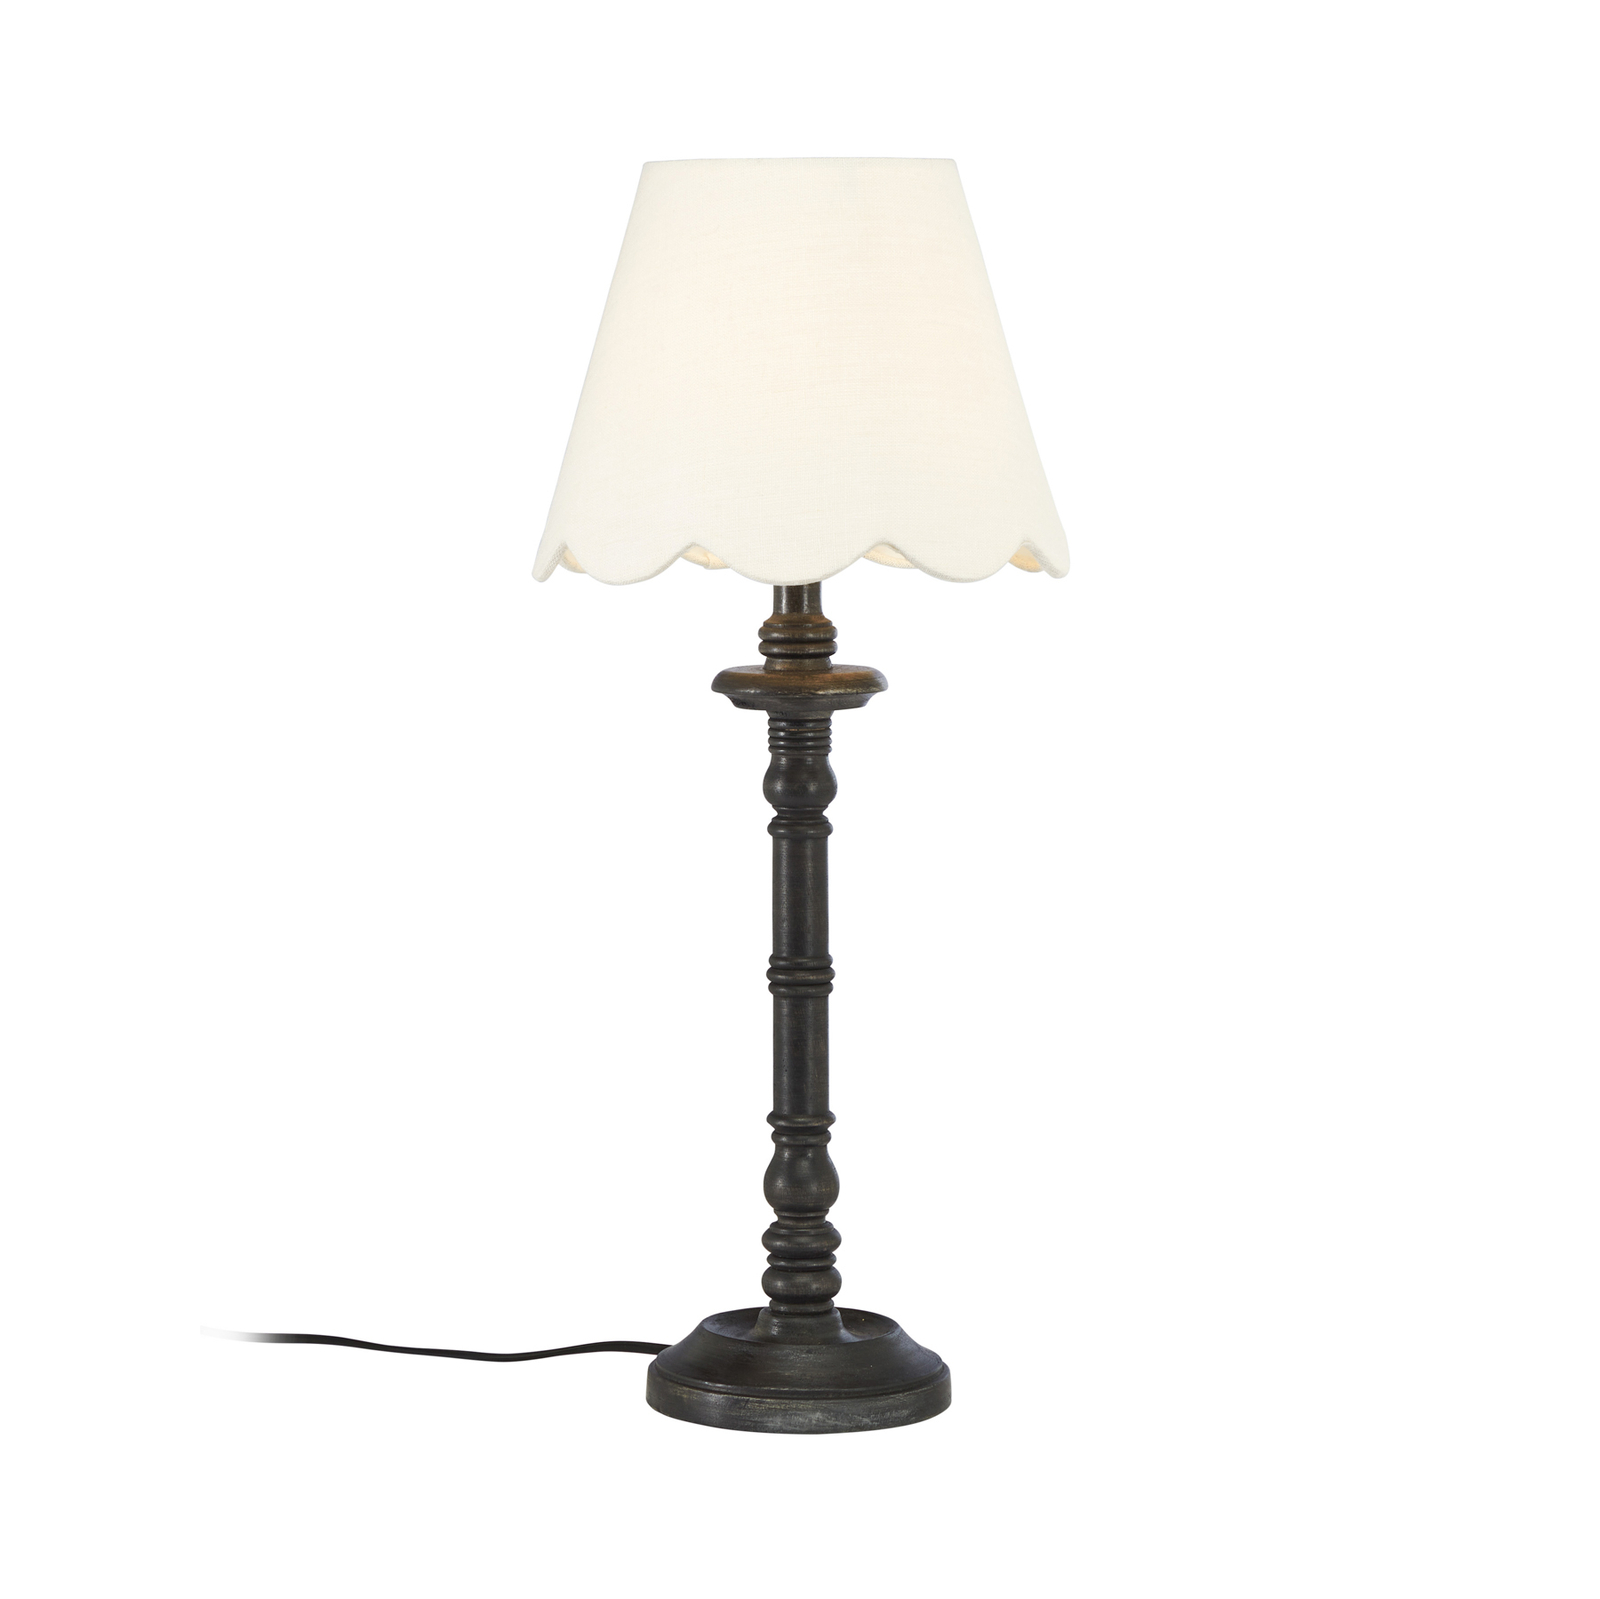 PR Home Joy bordslampa med böjd tygskärm